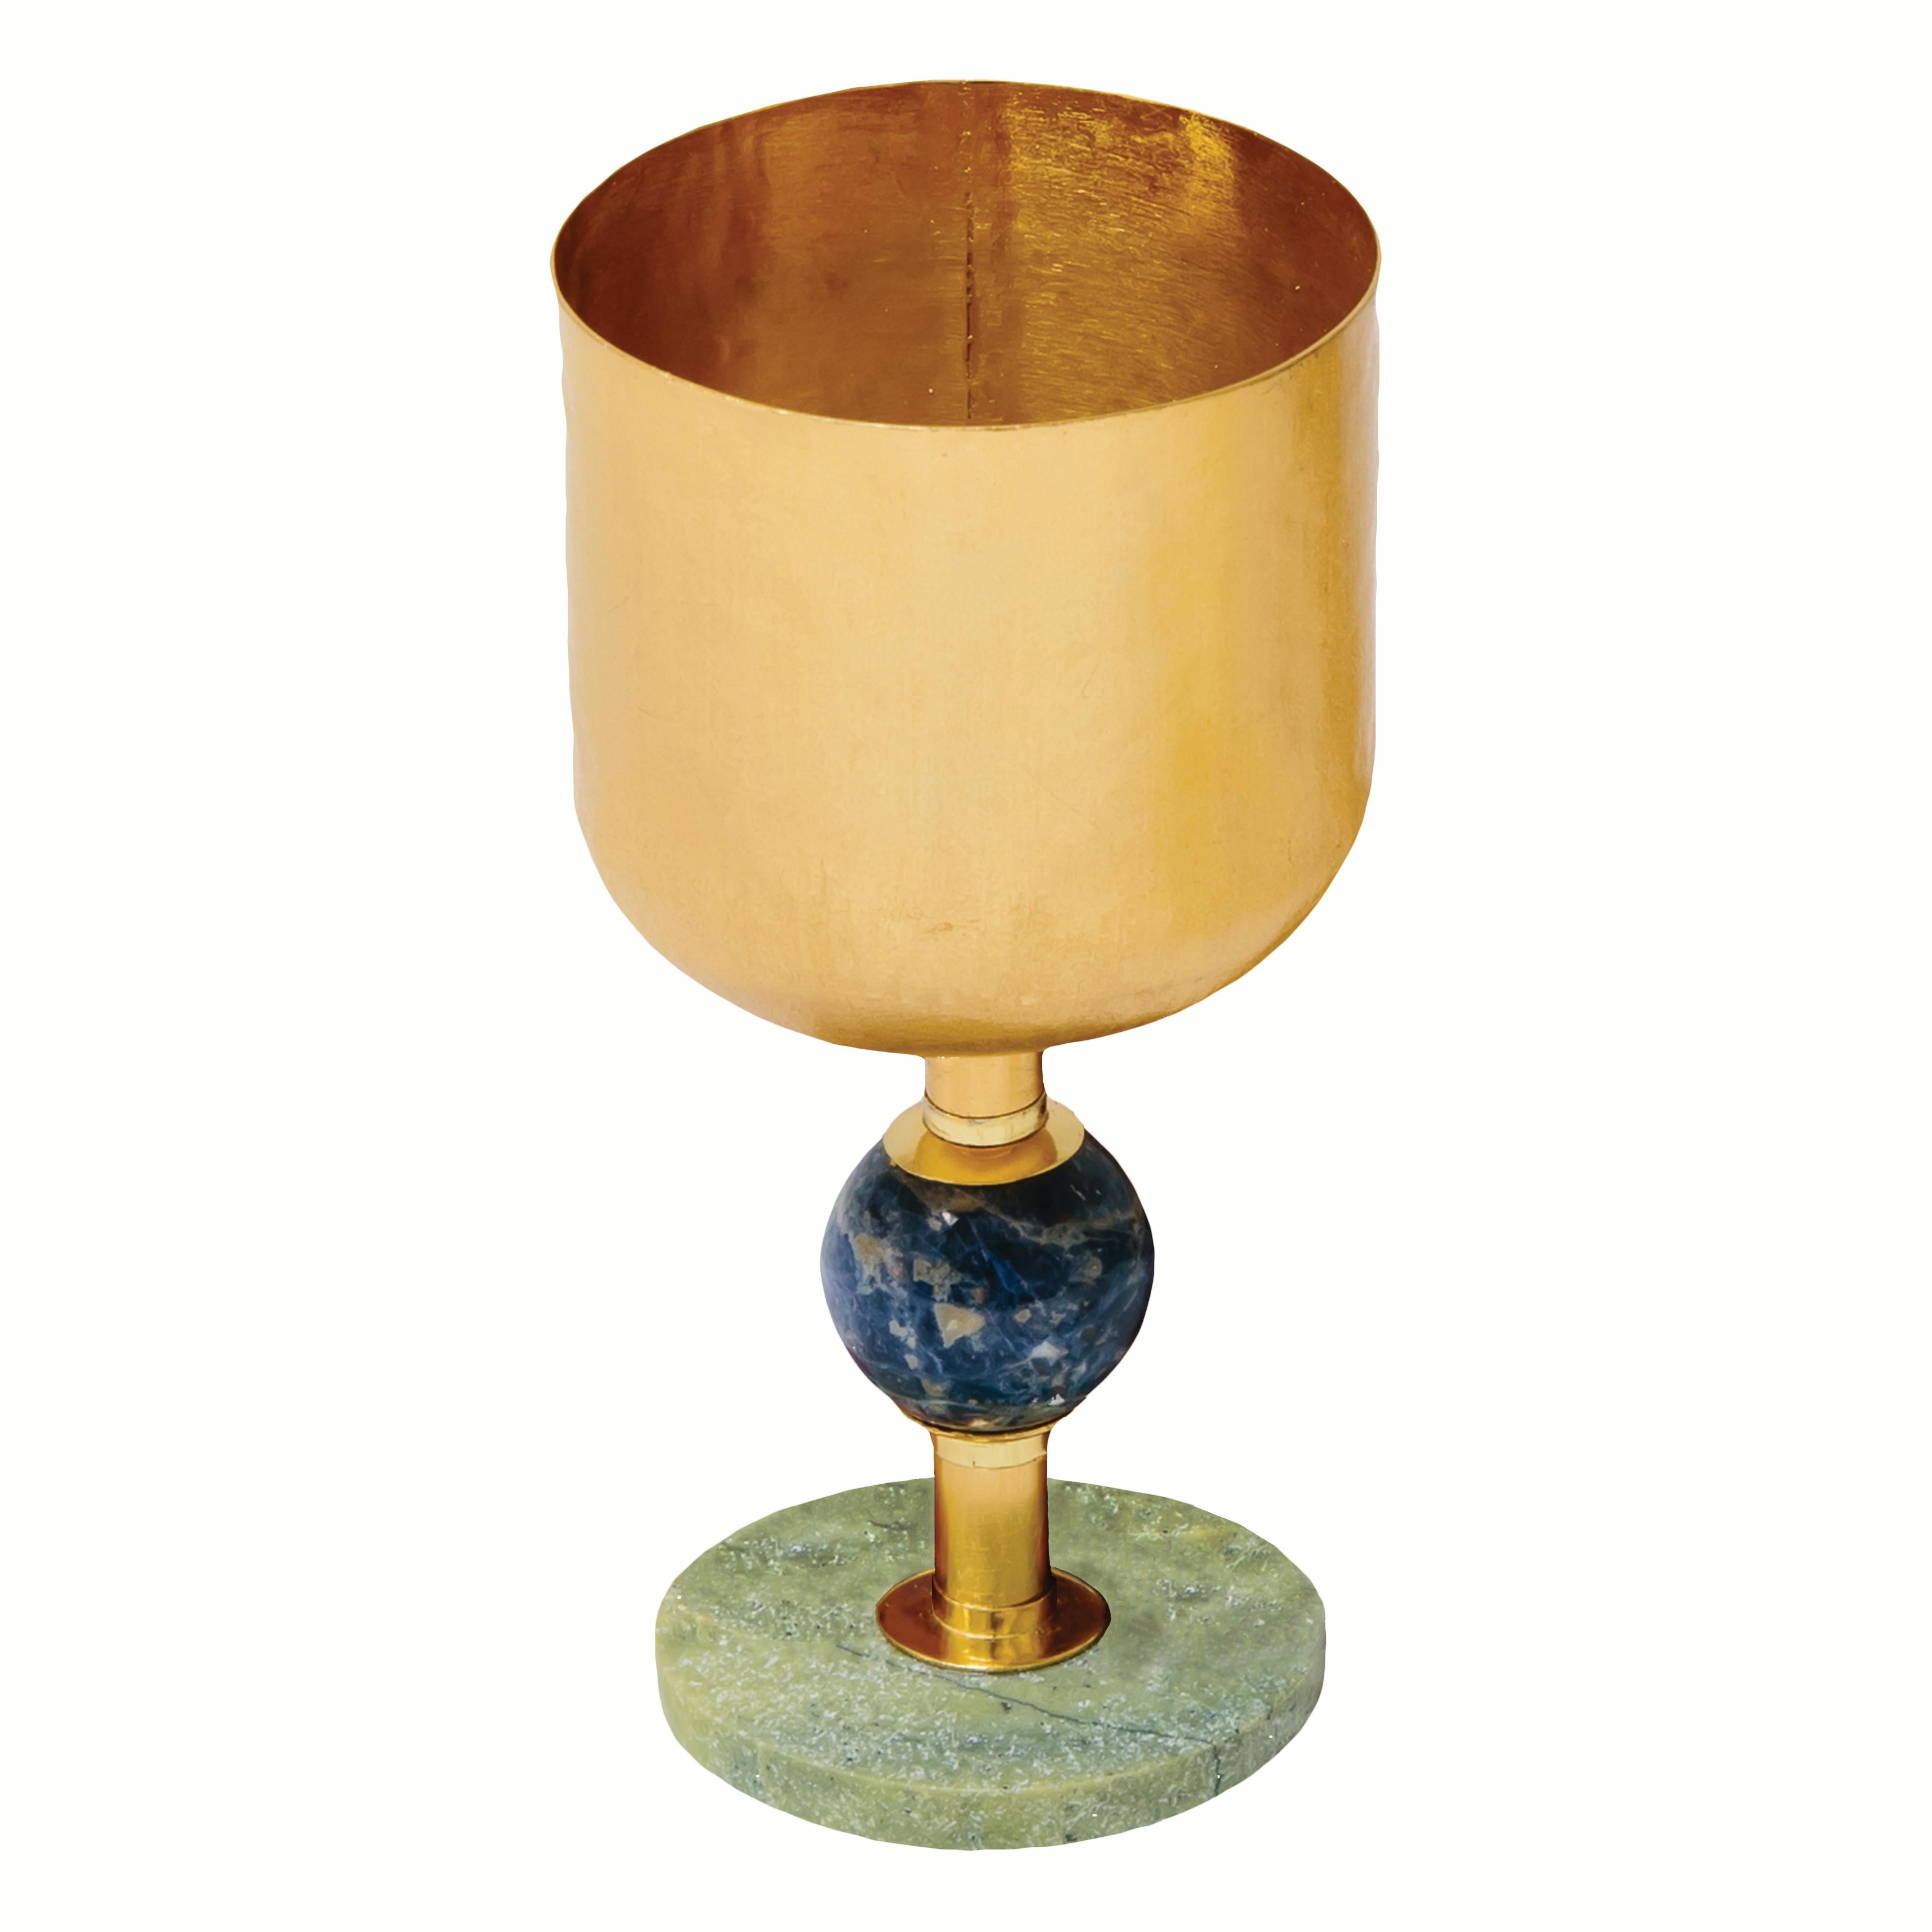 Italian Contemporary Gold Plated Cup Serpentine - Lapis Lazuli Stone by Natalia Criado For Sale